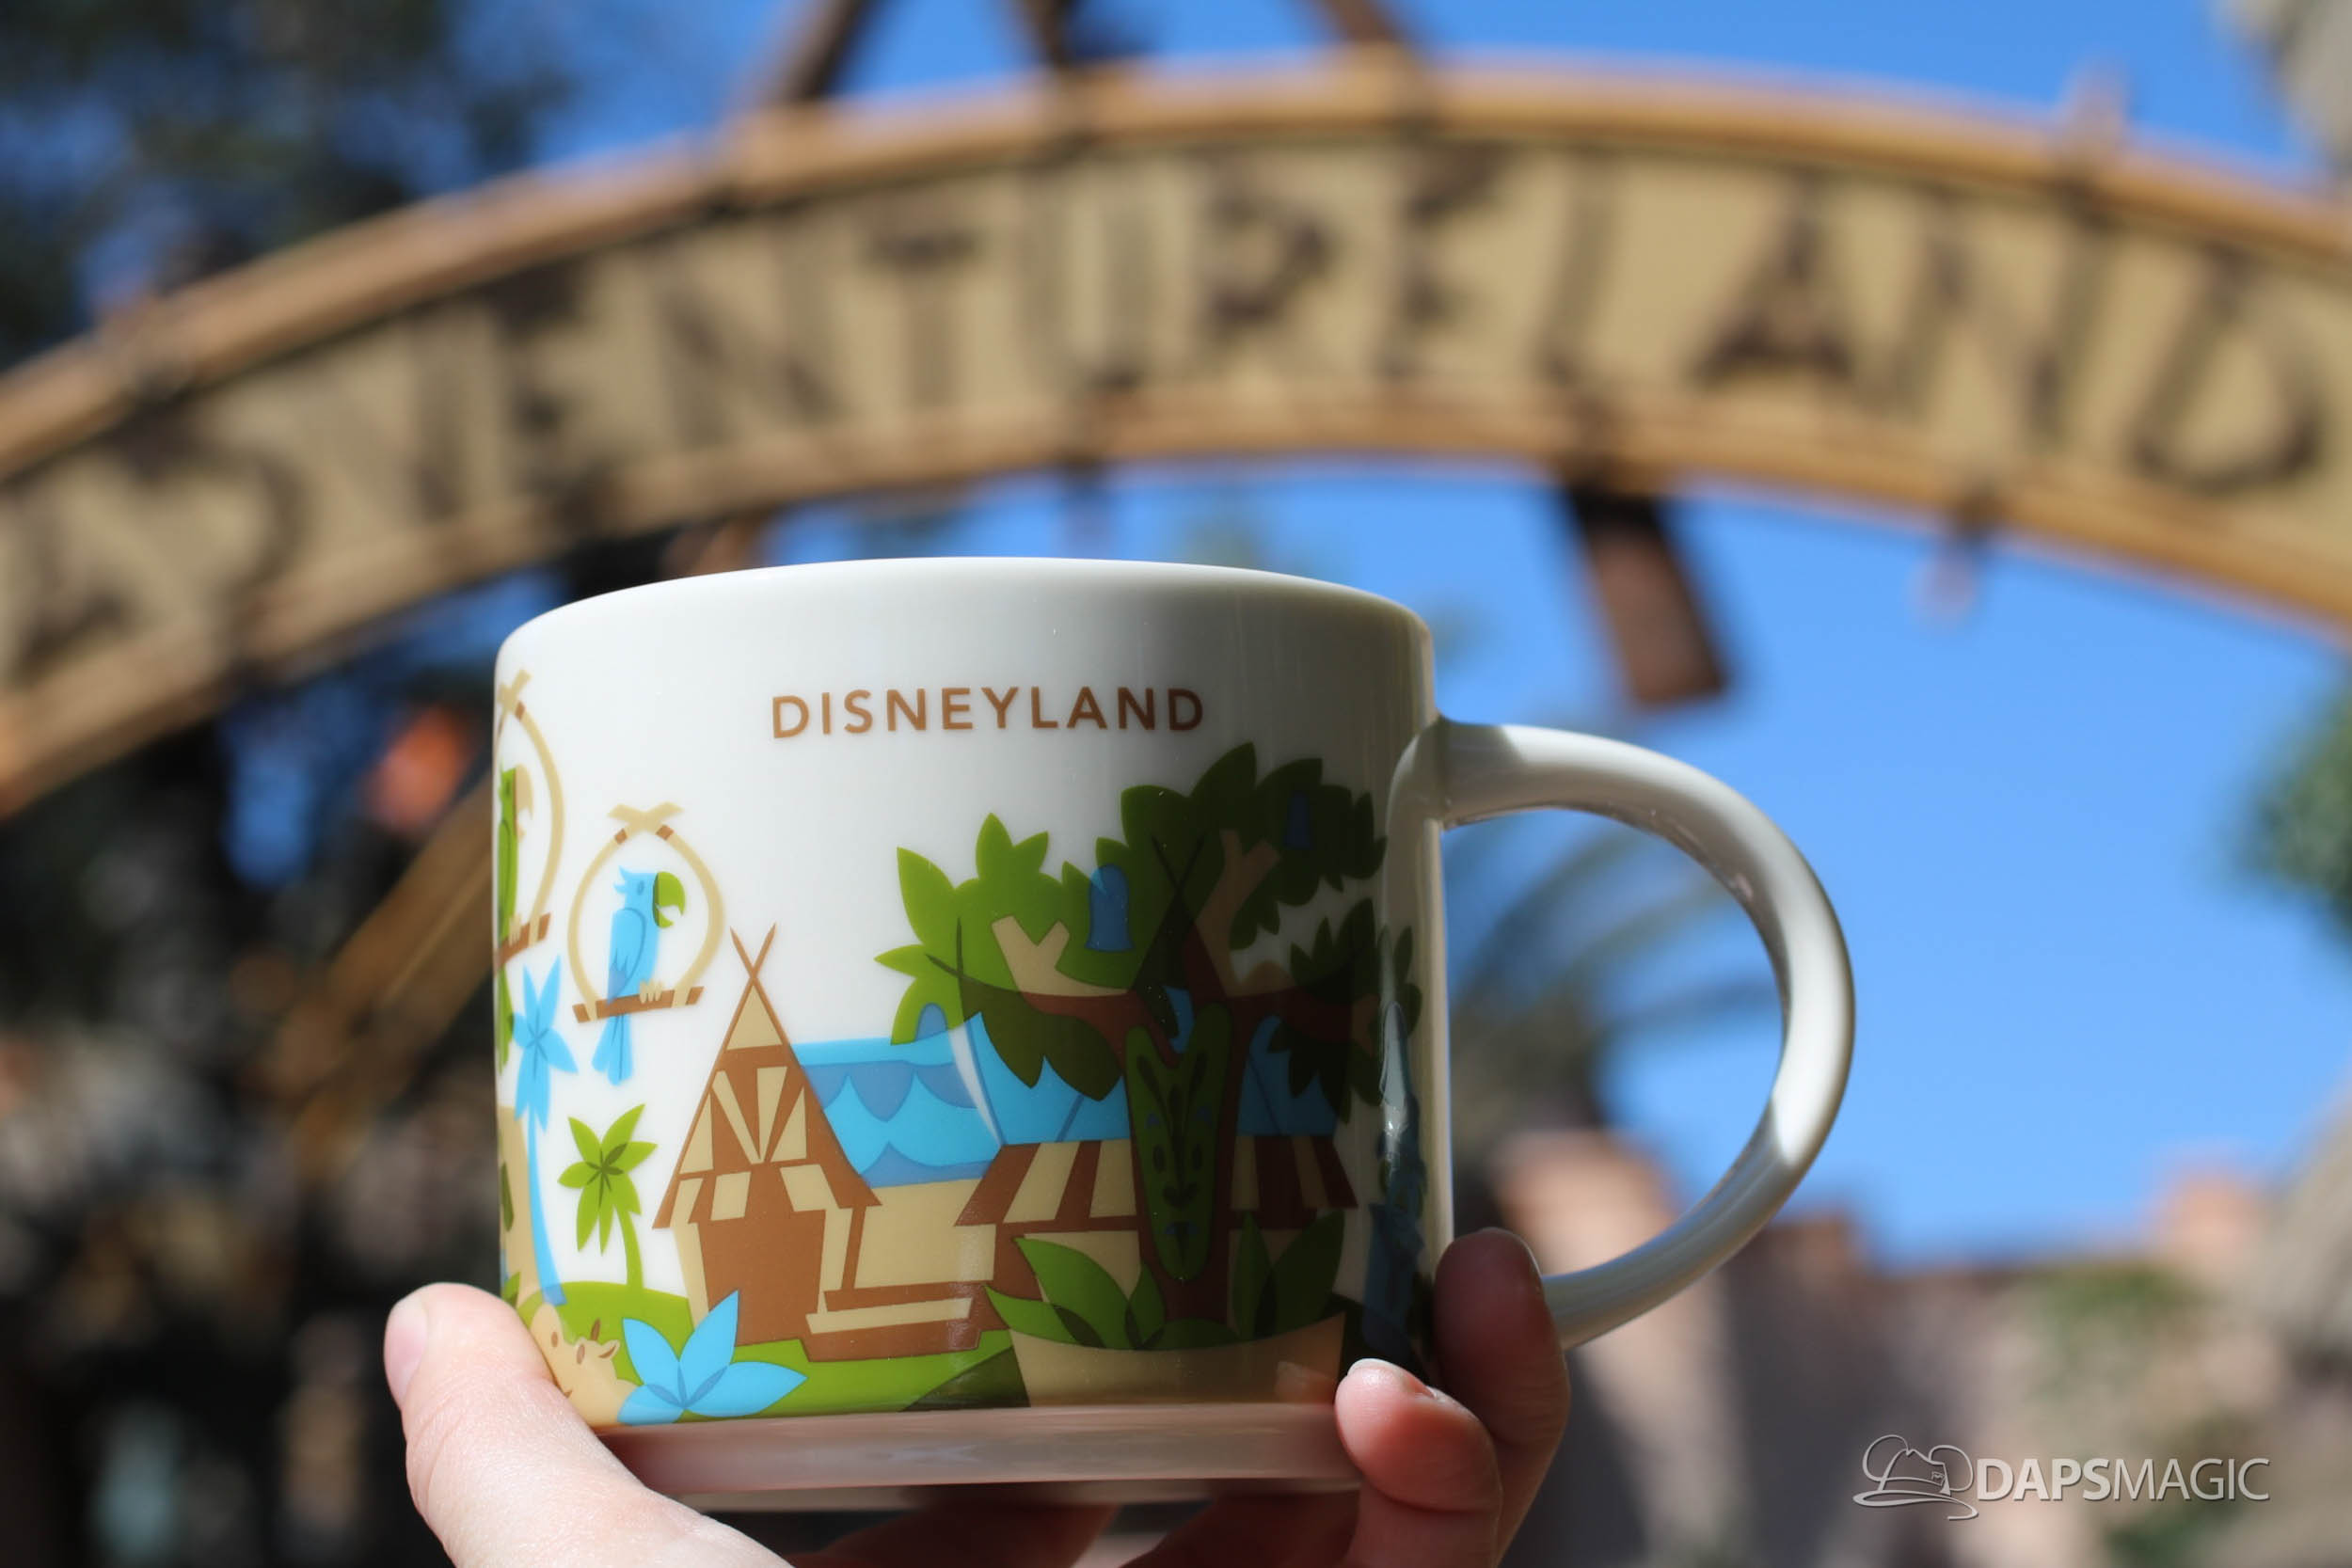 New You Are Here Mug Celebrating Adventureland Now at Disneyland’s Market House (Starbucks)!